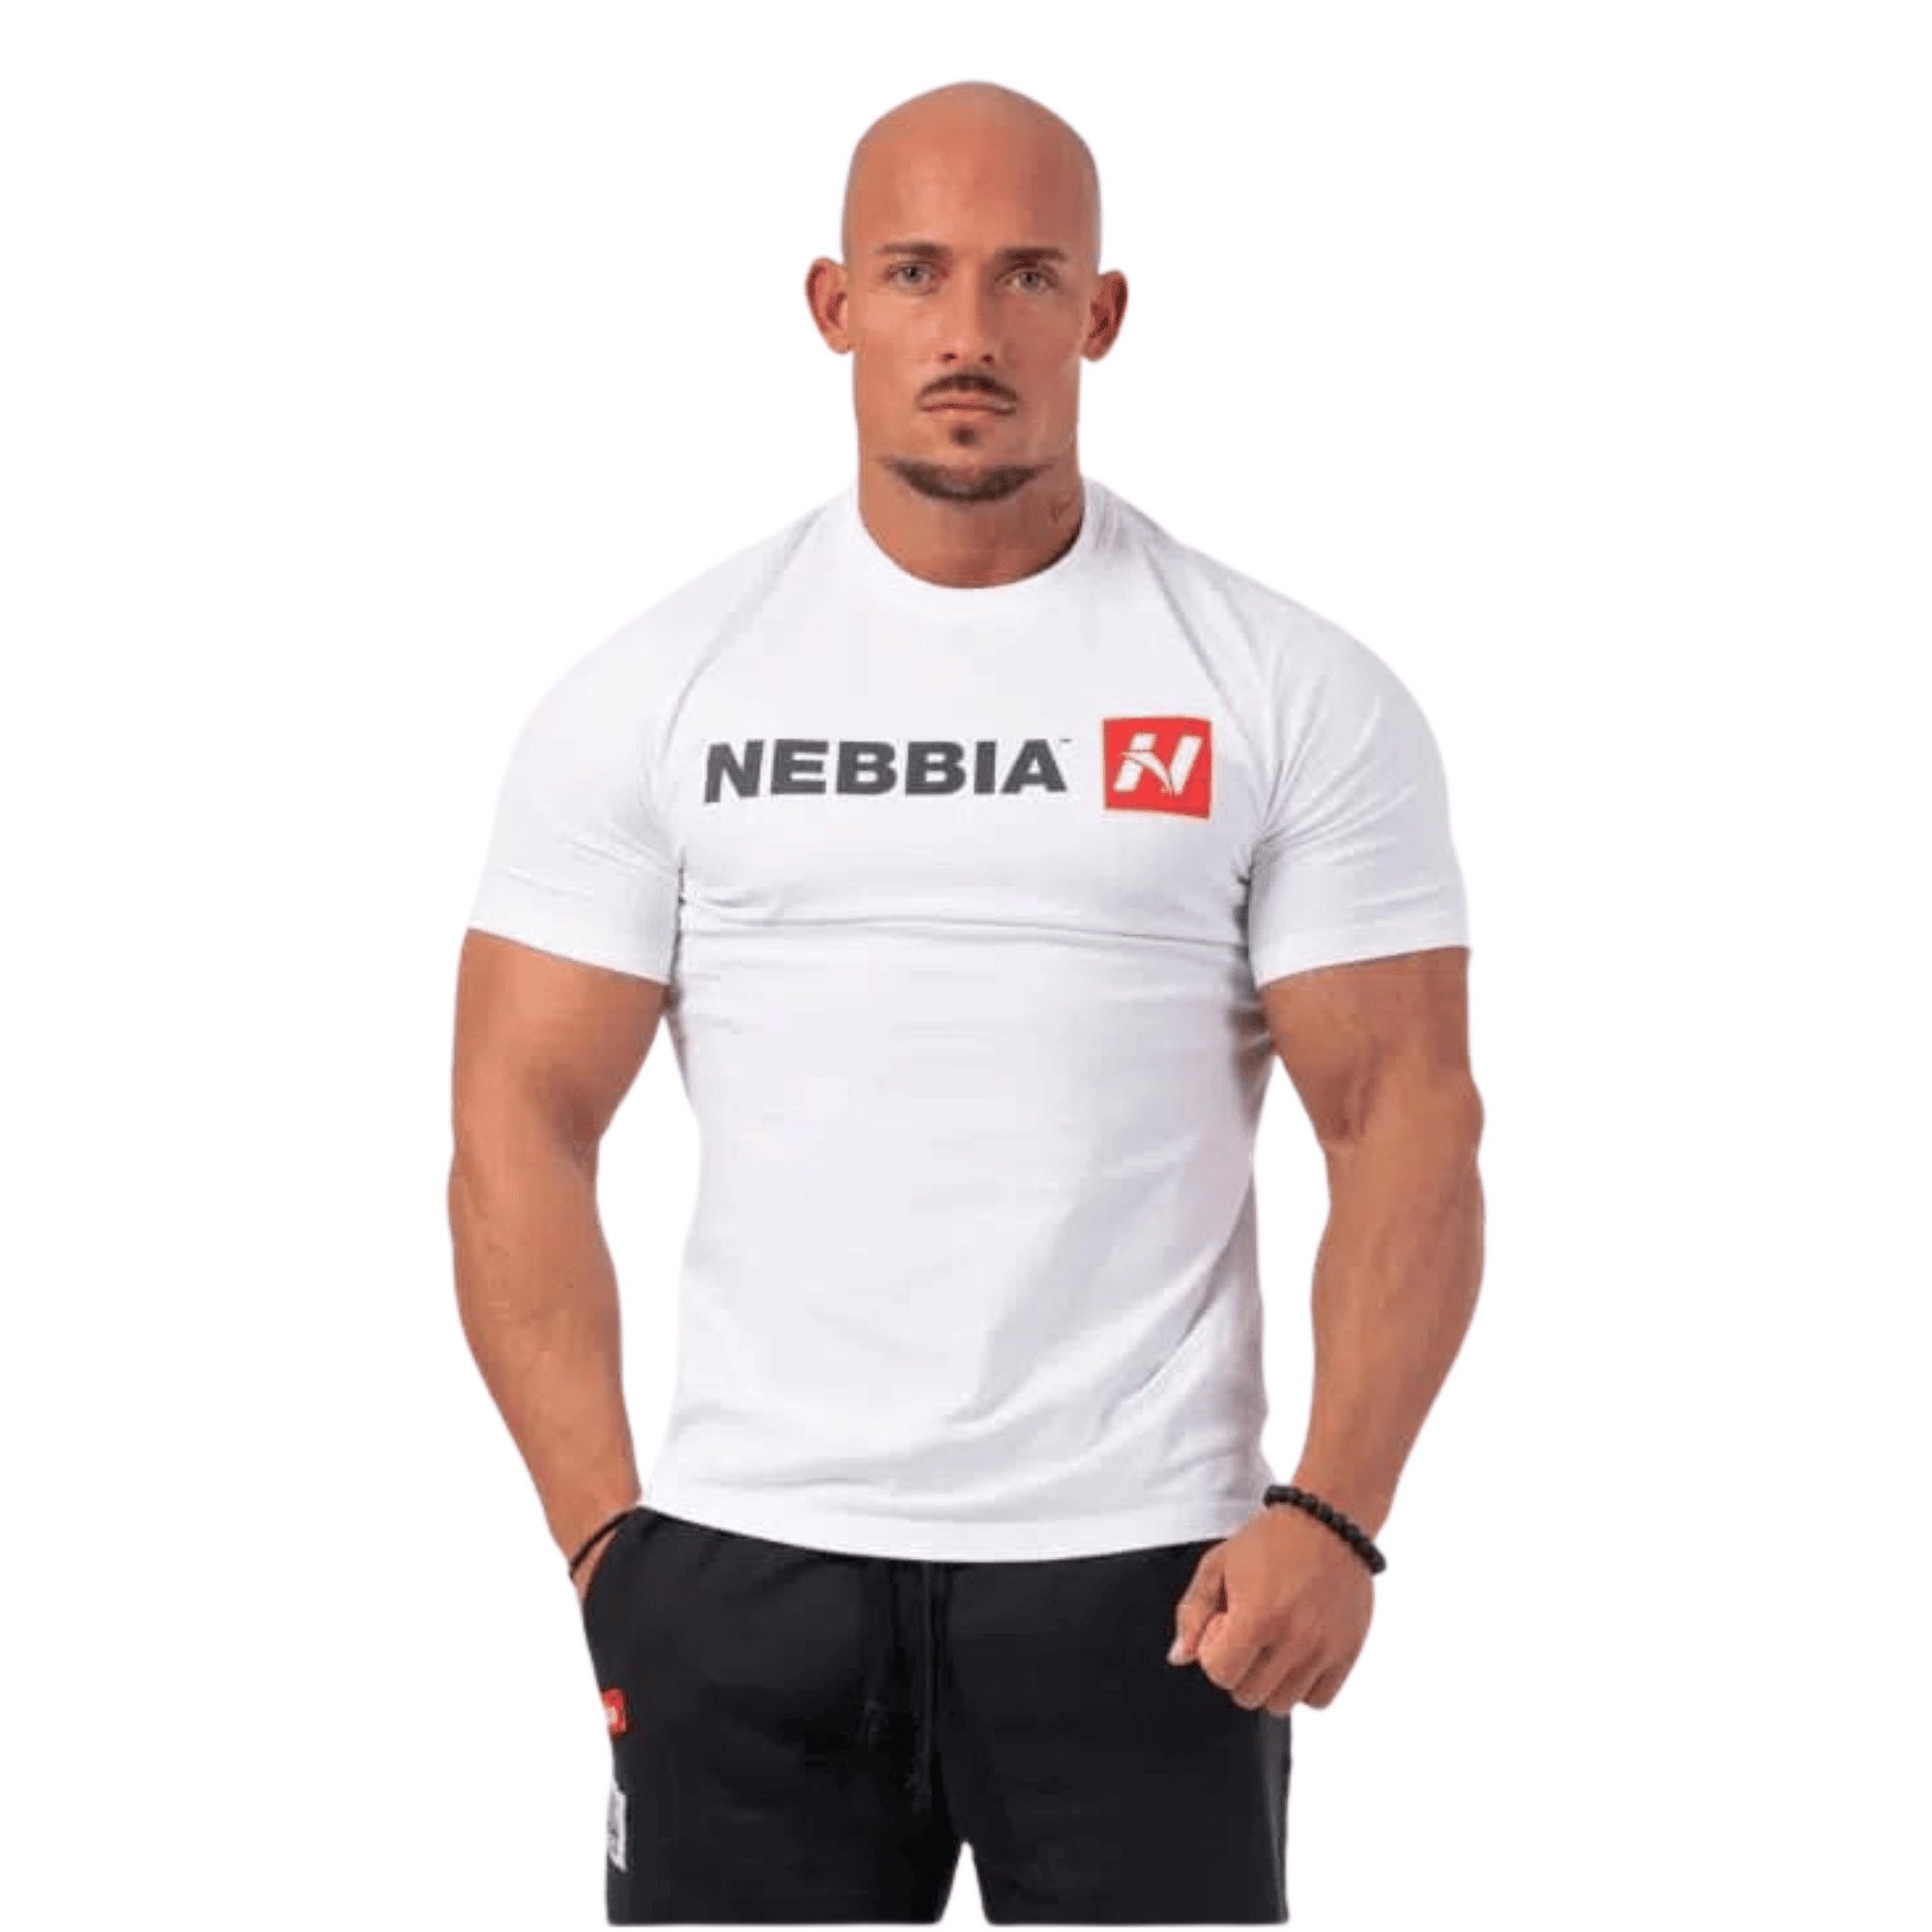 NEBBIA RED "N" T-SHIRT 292 WHITE